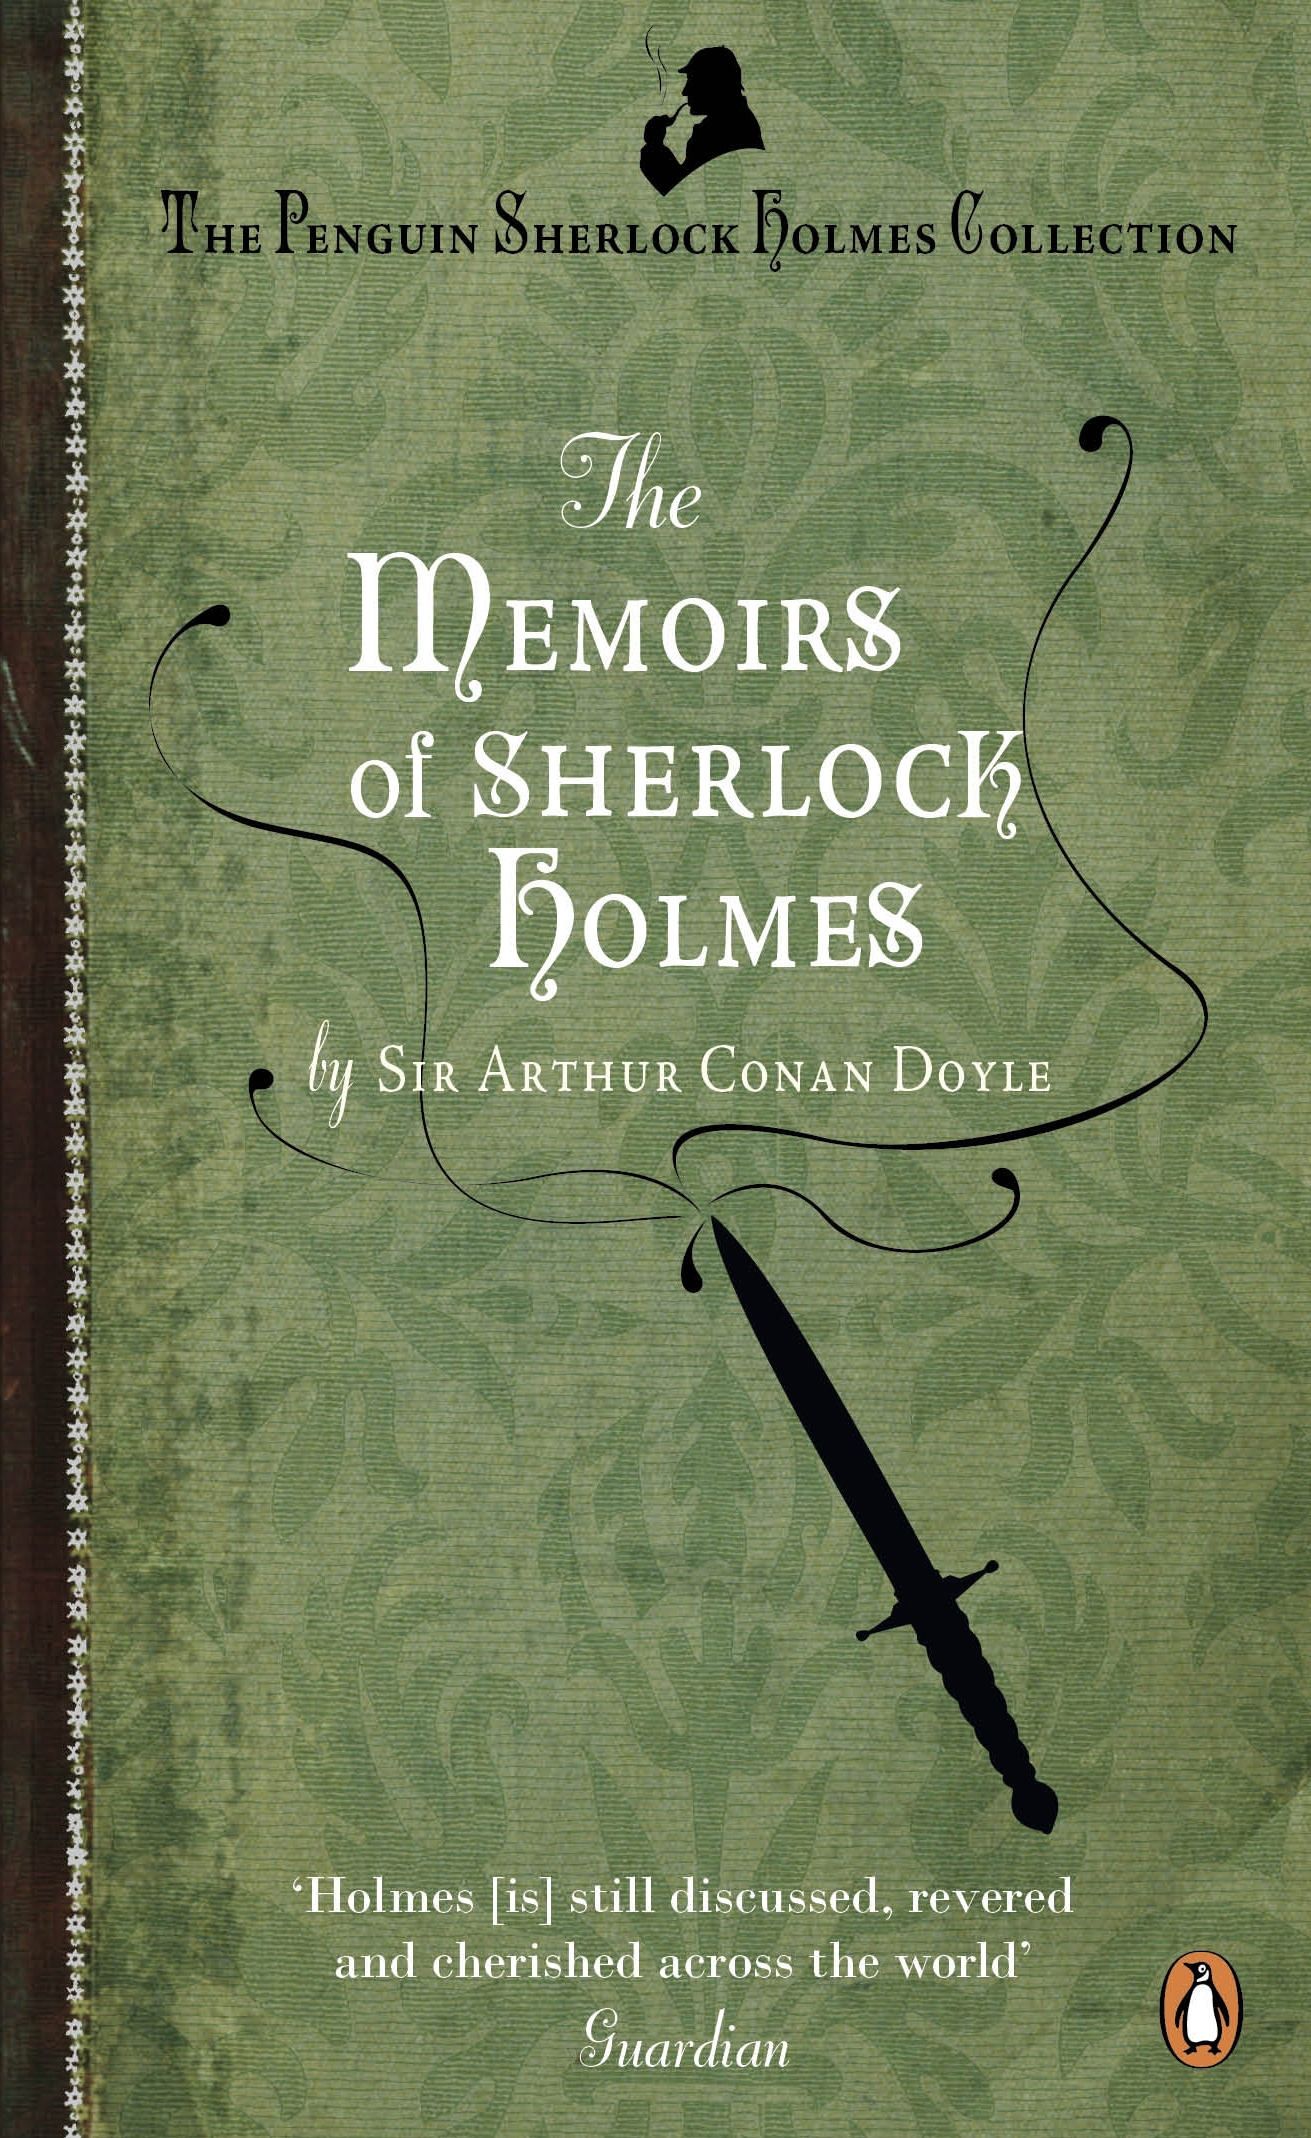 Sherlock Holmes Books Online Free